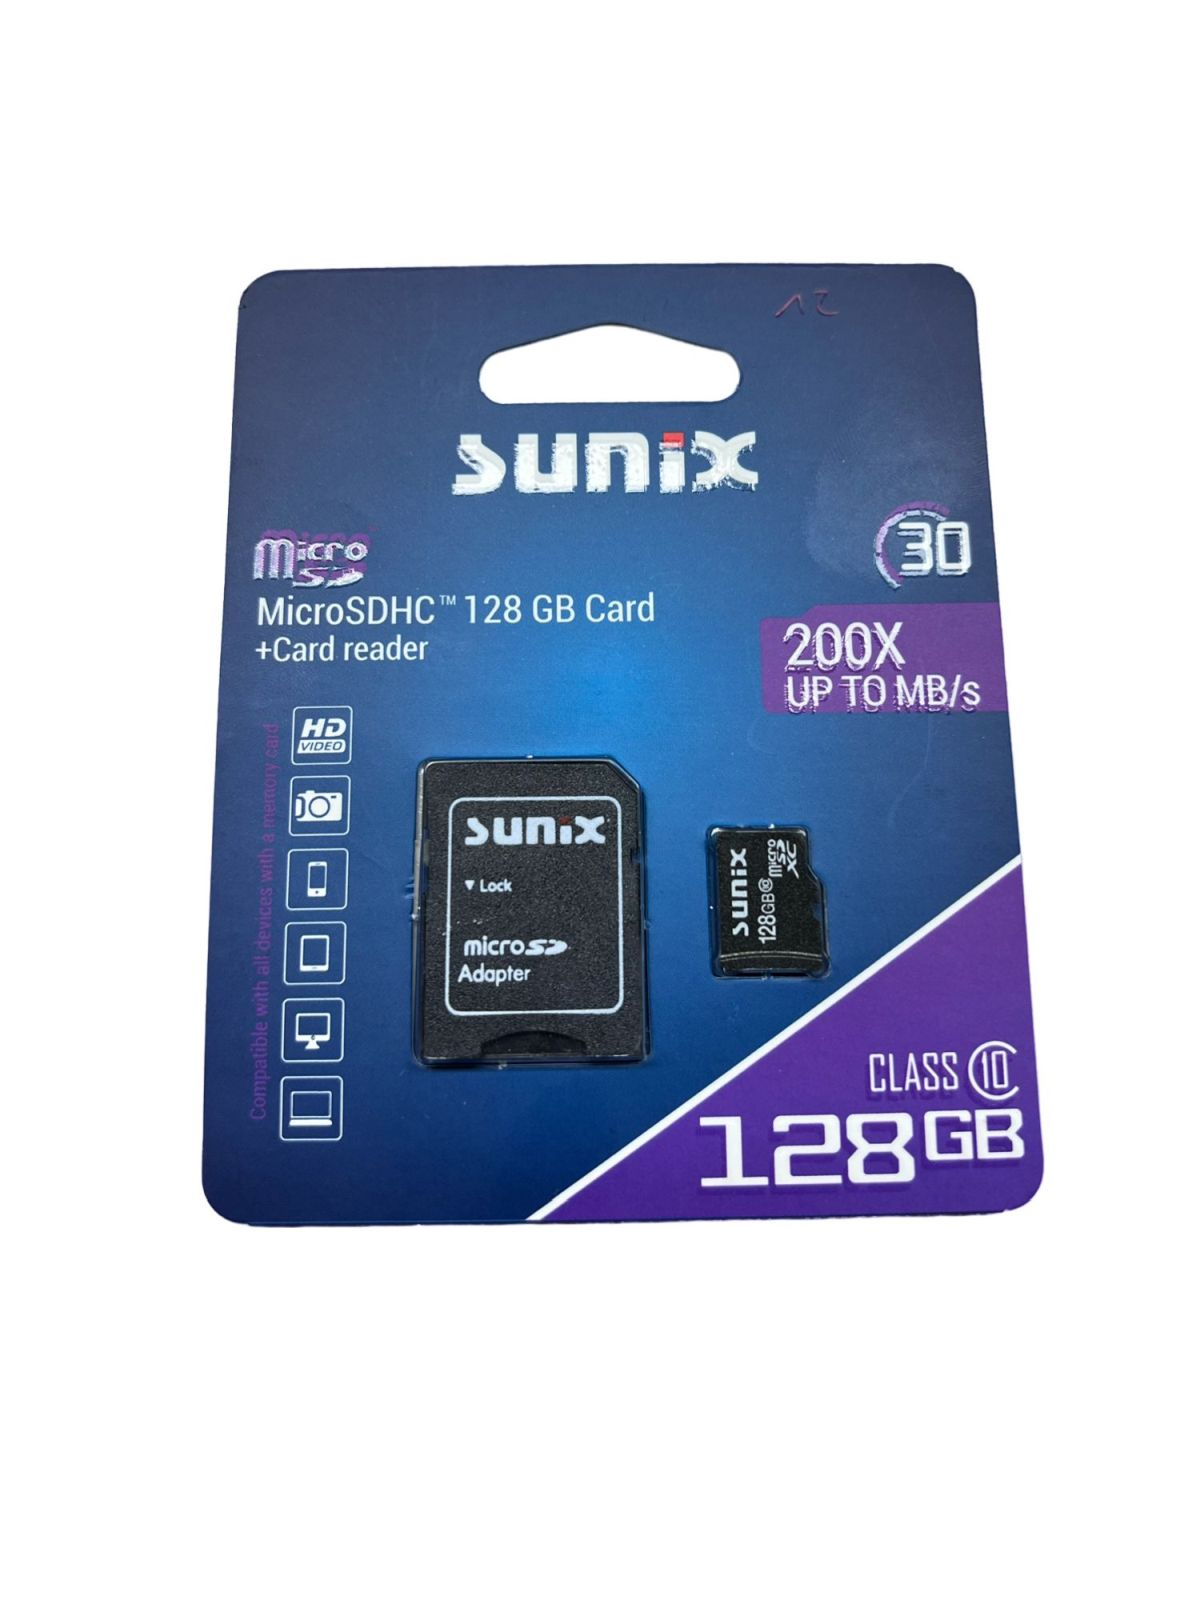 SUNIX 128 MicroSDHC GB 11, Karte, Micro-SDHC Speicherkarte Class